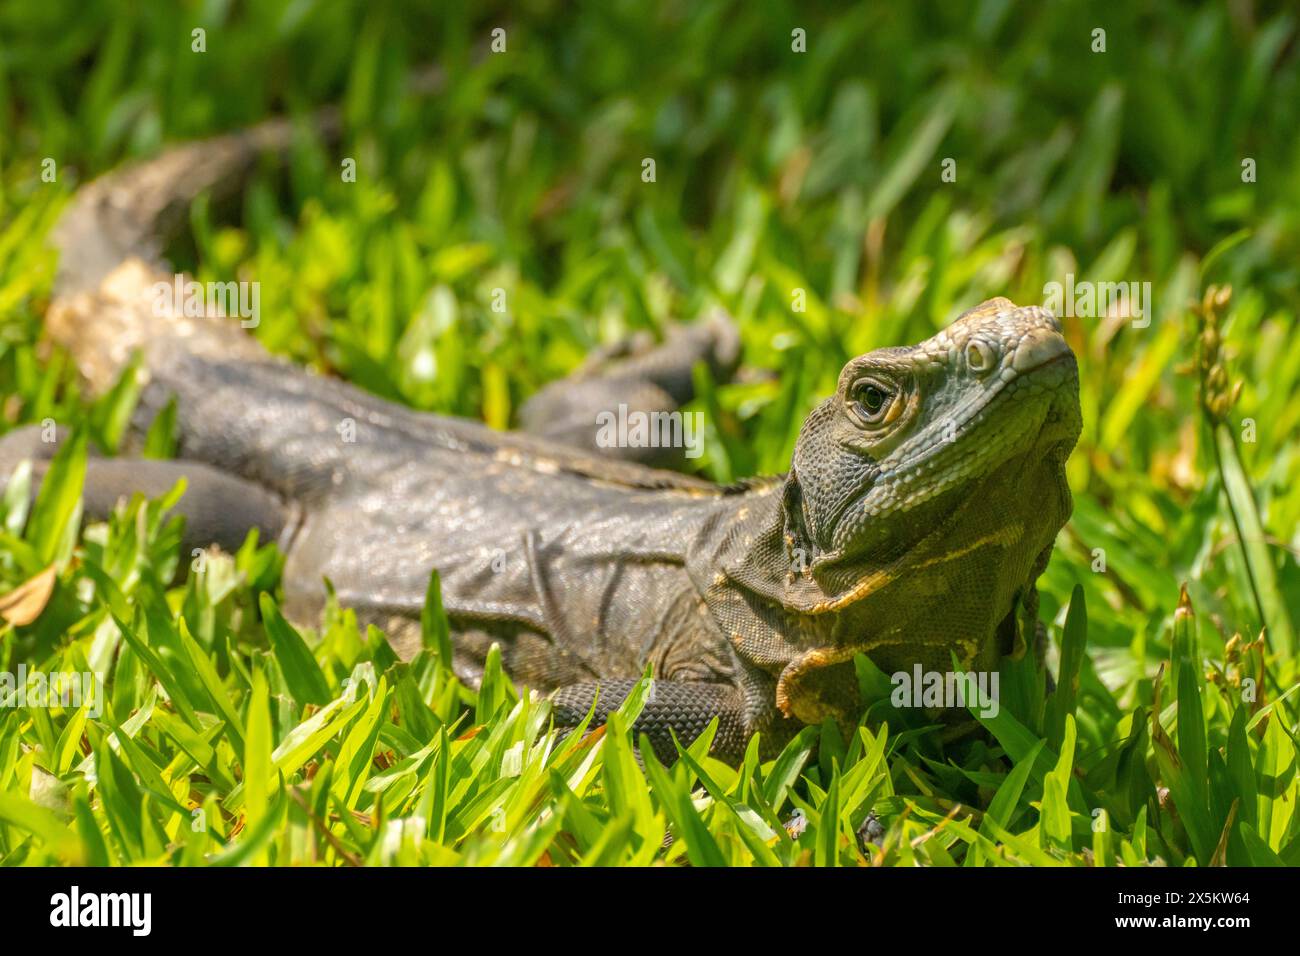 Costa Rica, Parque Nacional Carara. Black iguana sunning. Stock Photo